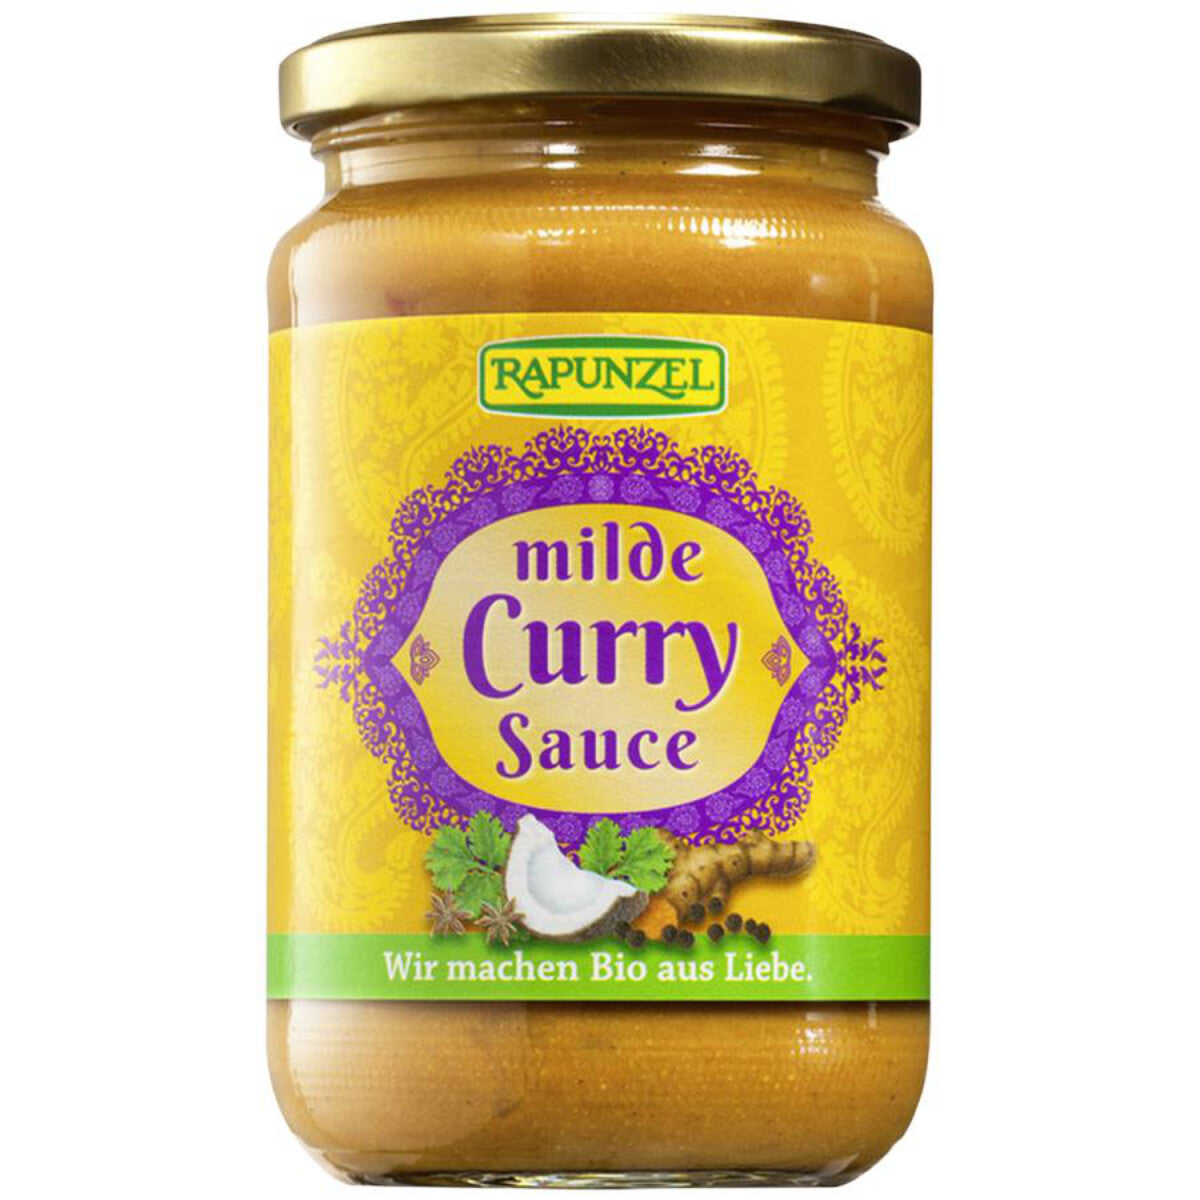 RAPUNZEL Milde Curry Sauce - 340 g